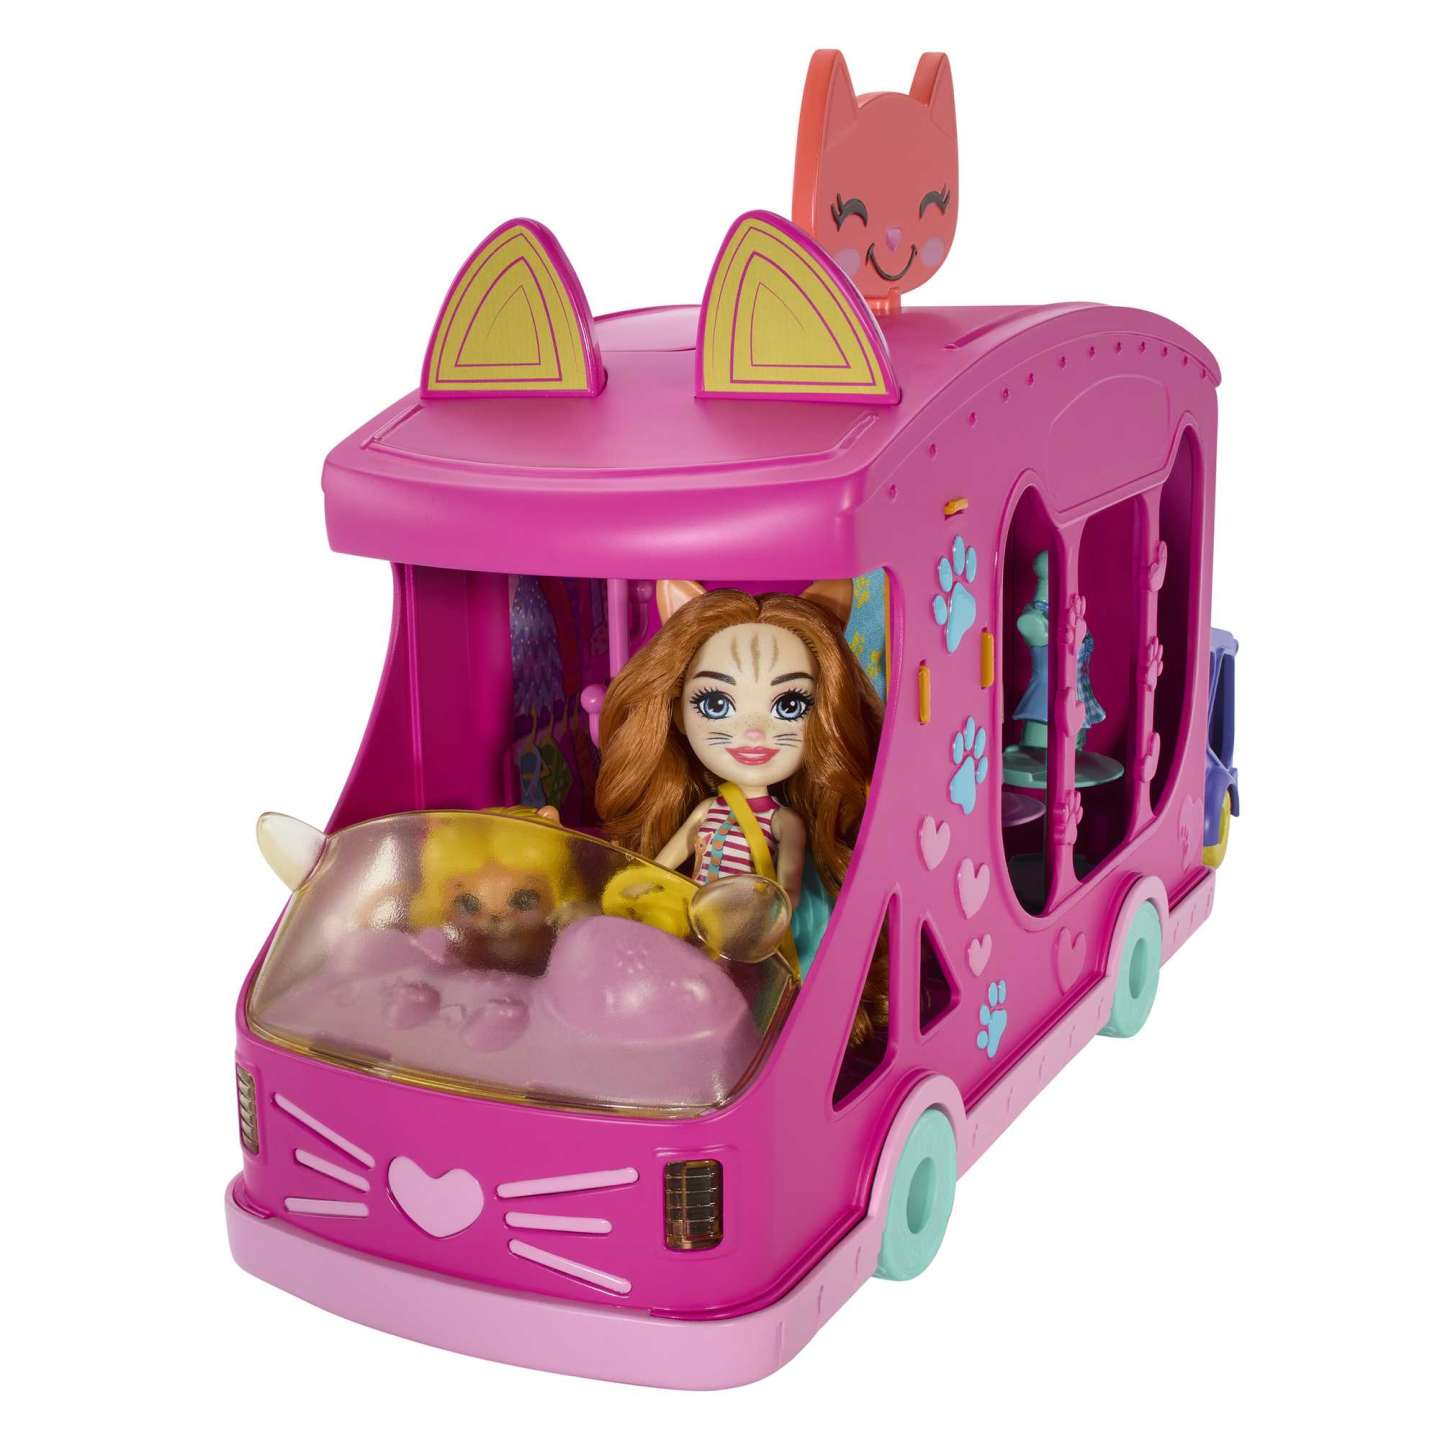 Mattel Enchantimals Cat Fashion Truck Playset HPB34 Kempers + Lelle